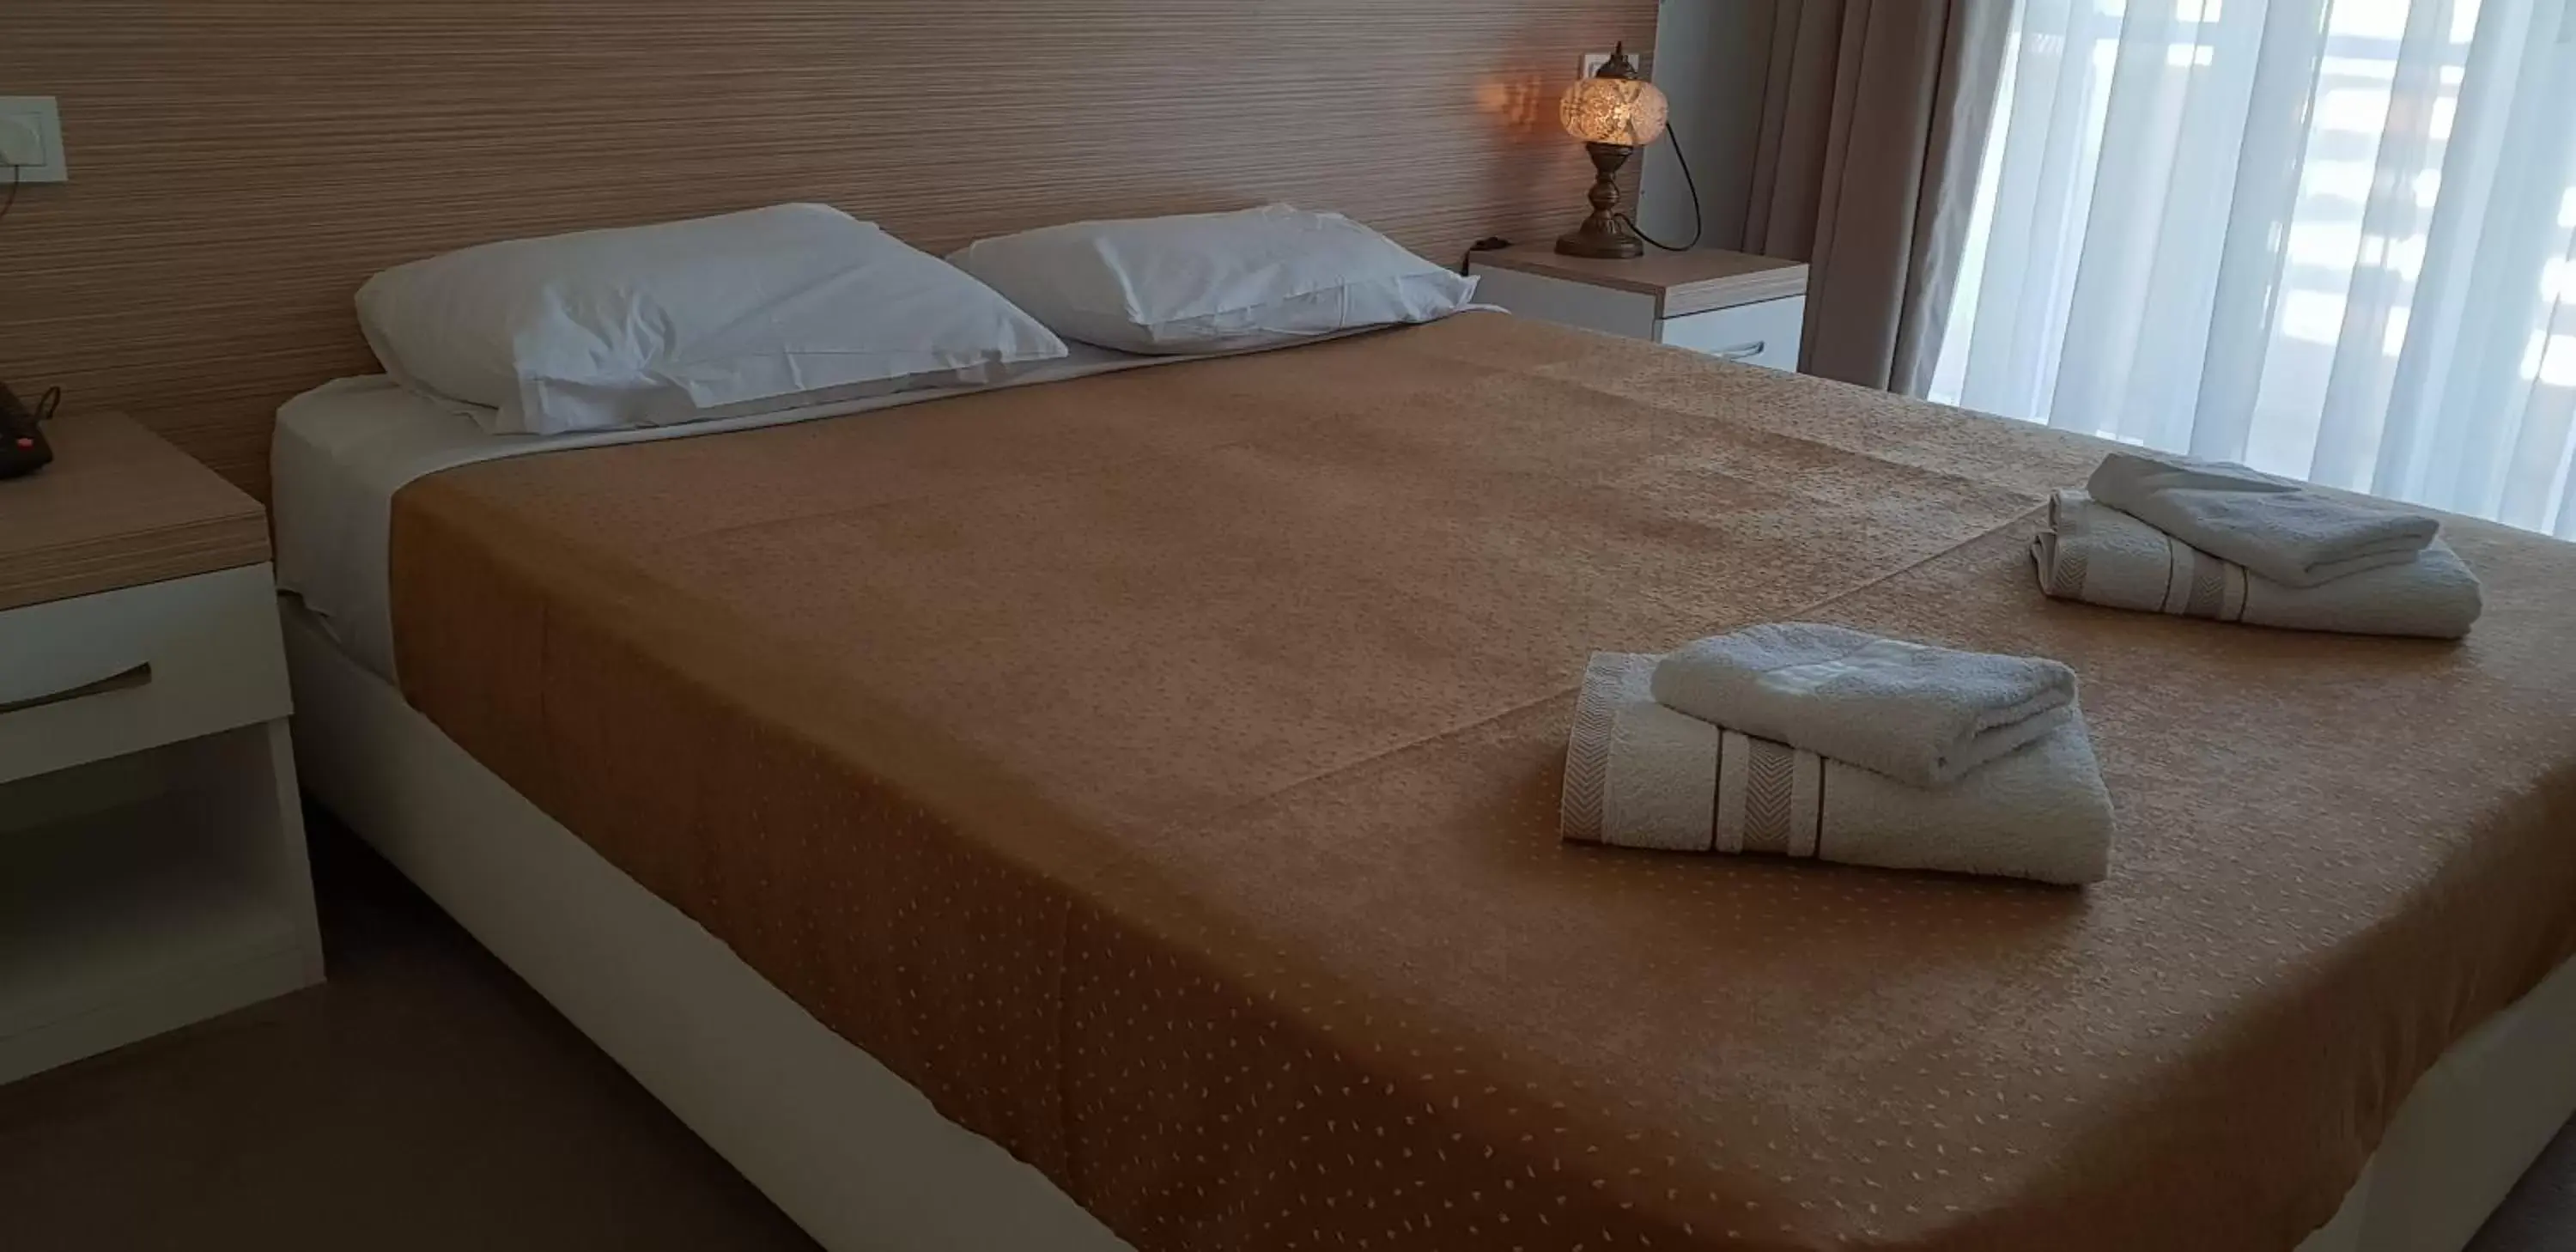 Bed in Nicea Hotel